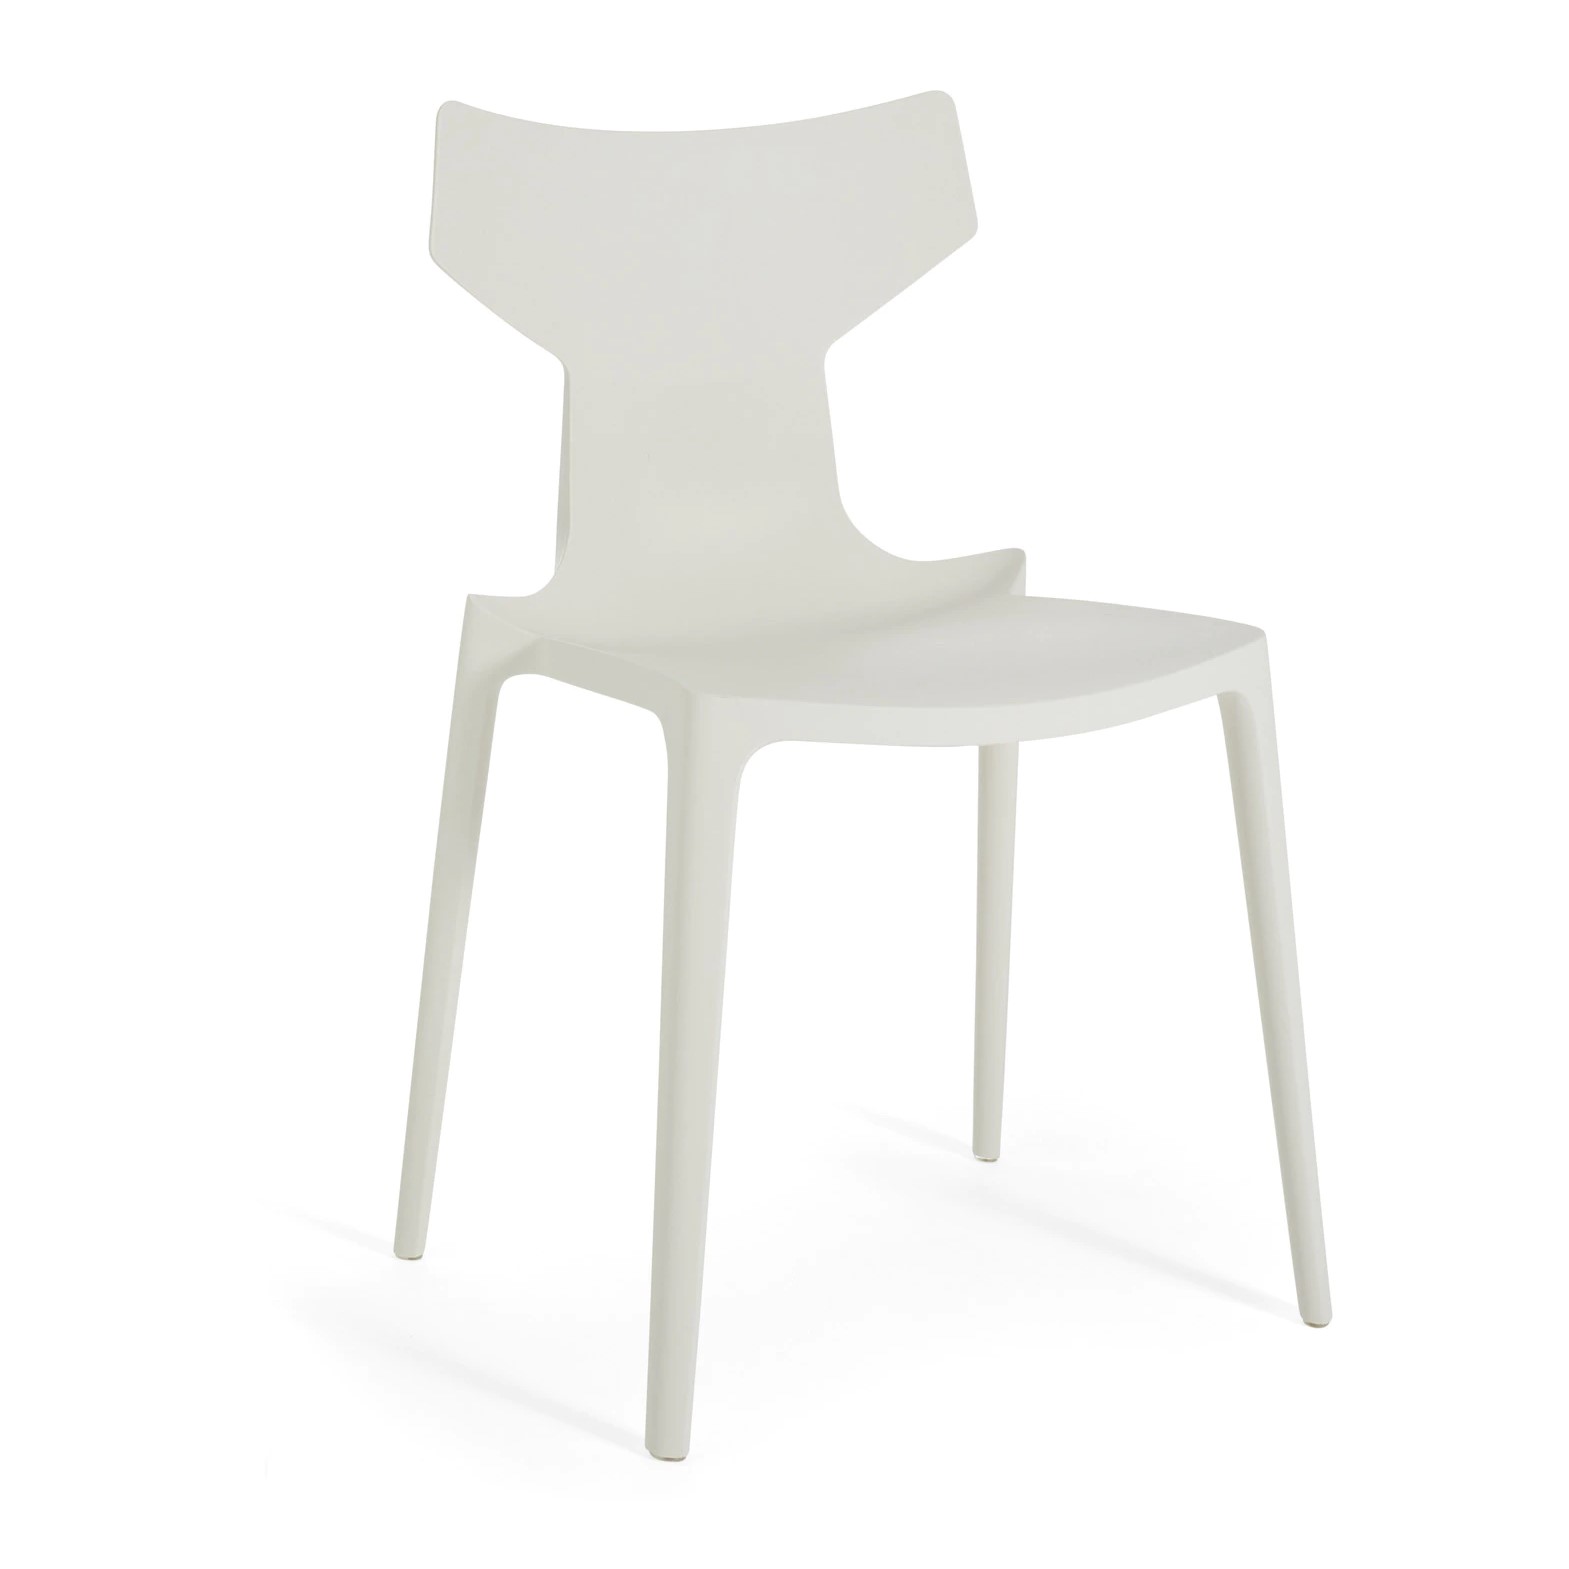 RE-CHAIR καρέκλα - συσκευασία 2 τεμαχίων Image 1++